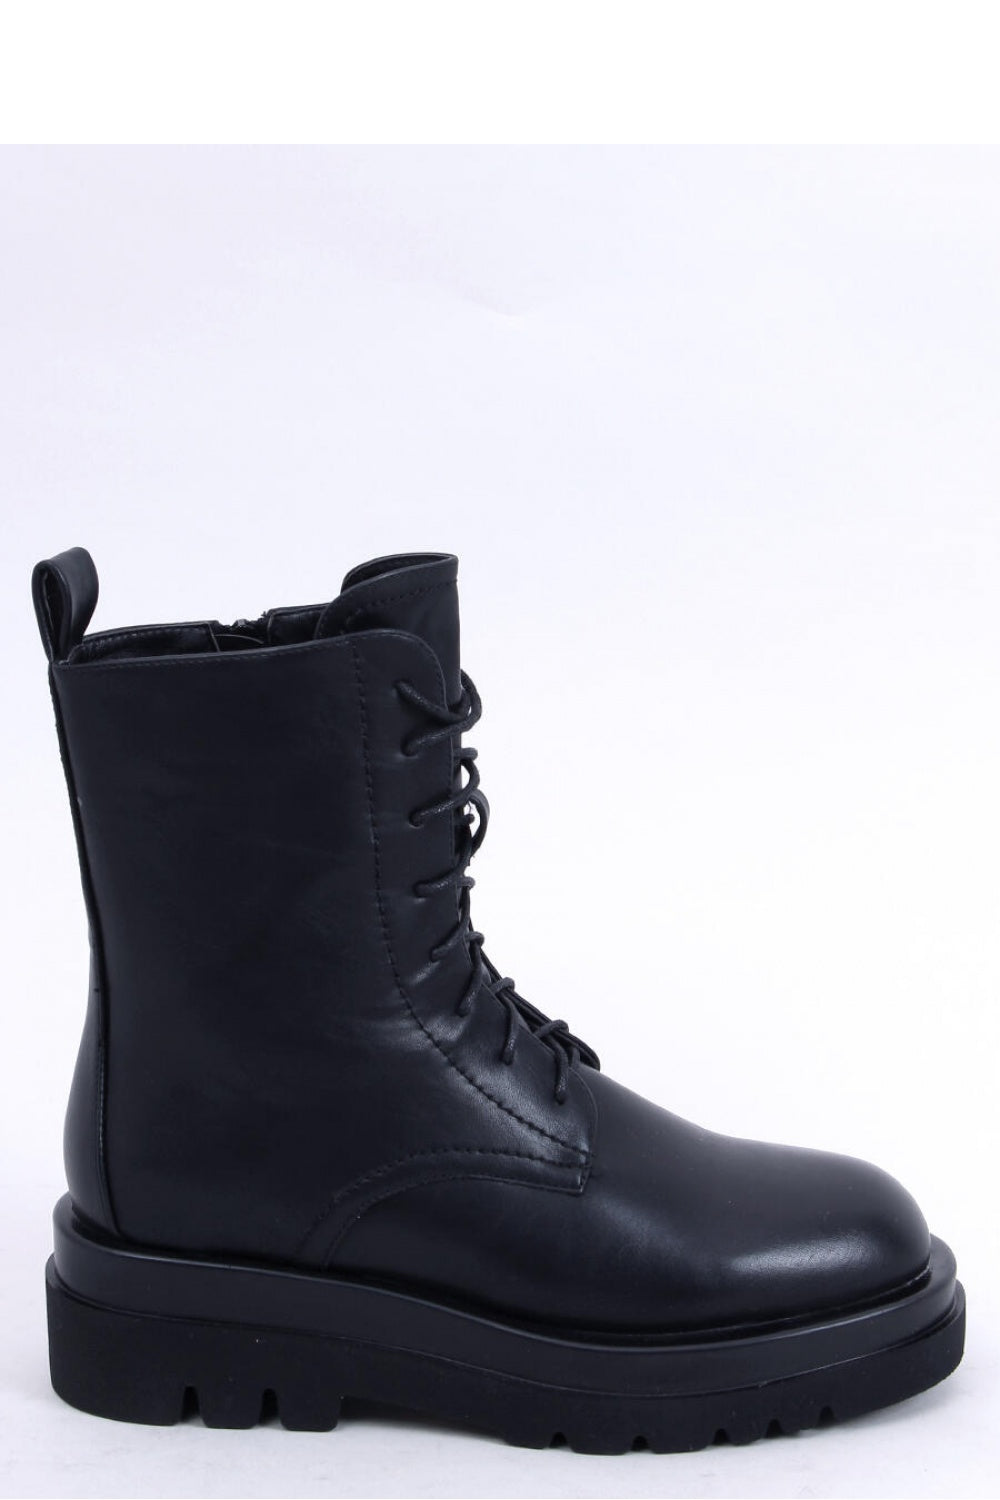 Boots model 174062 Inello Posh Styles Apparel